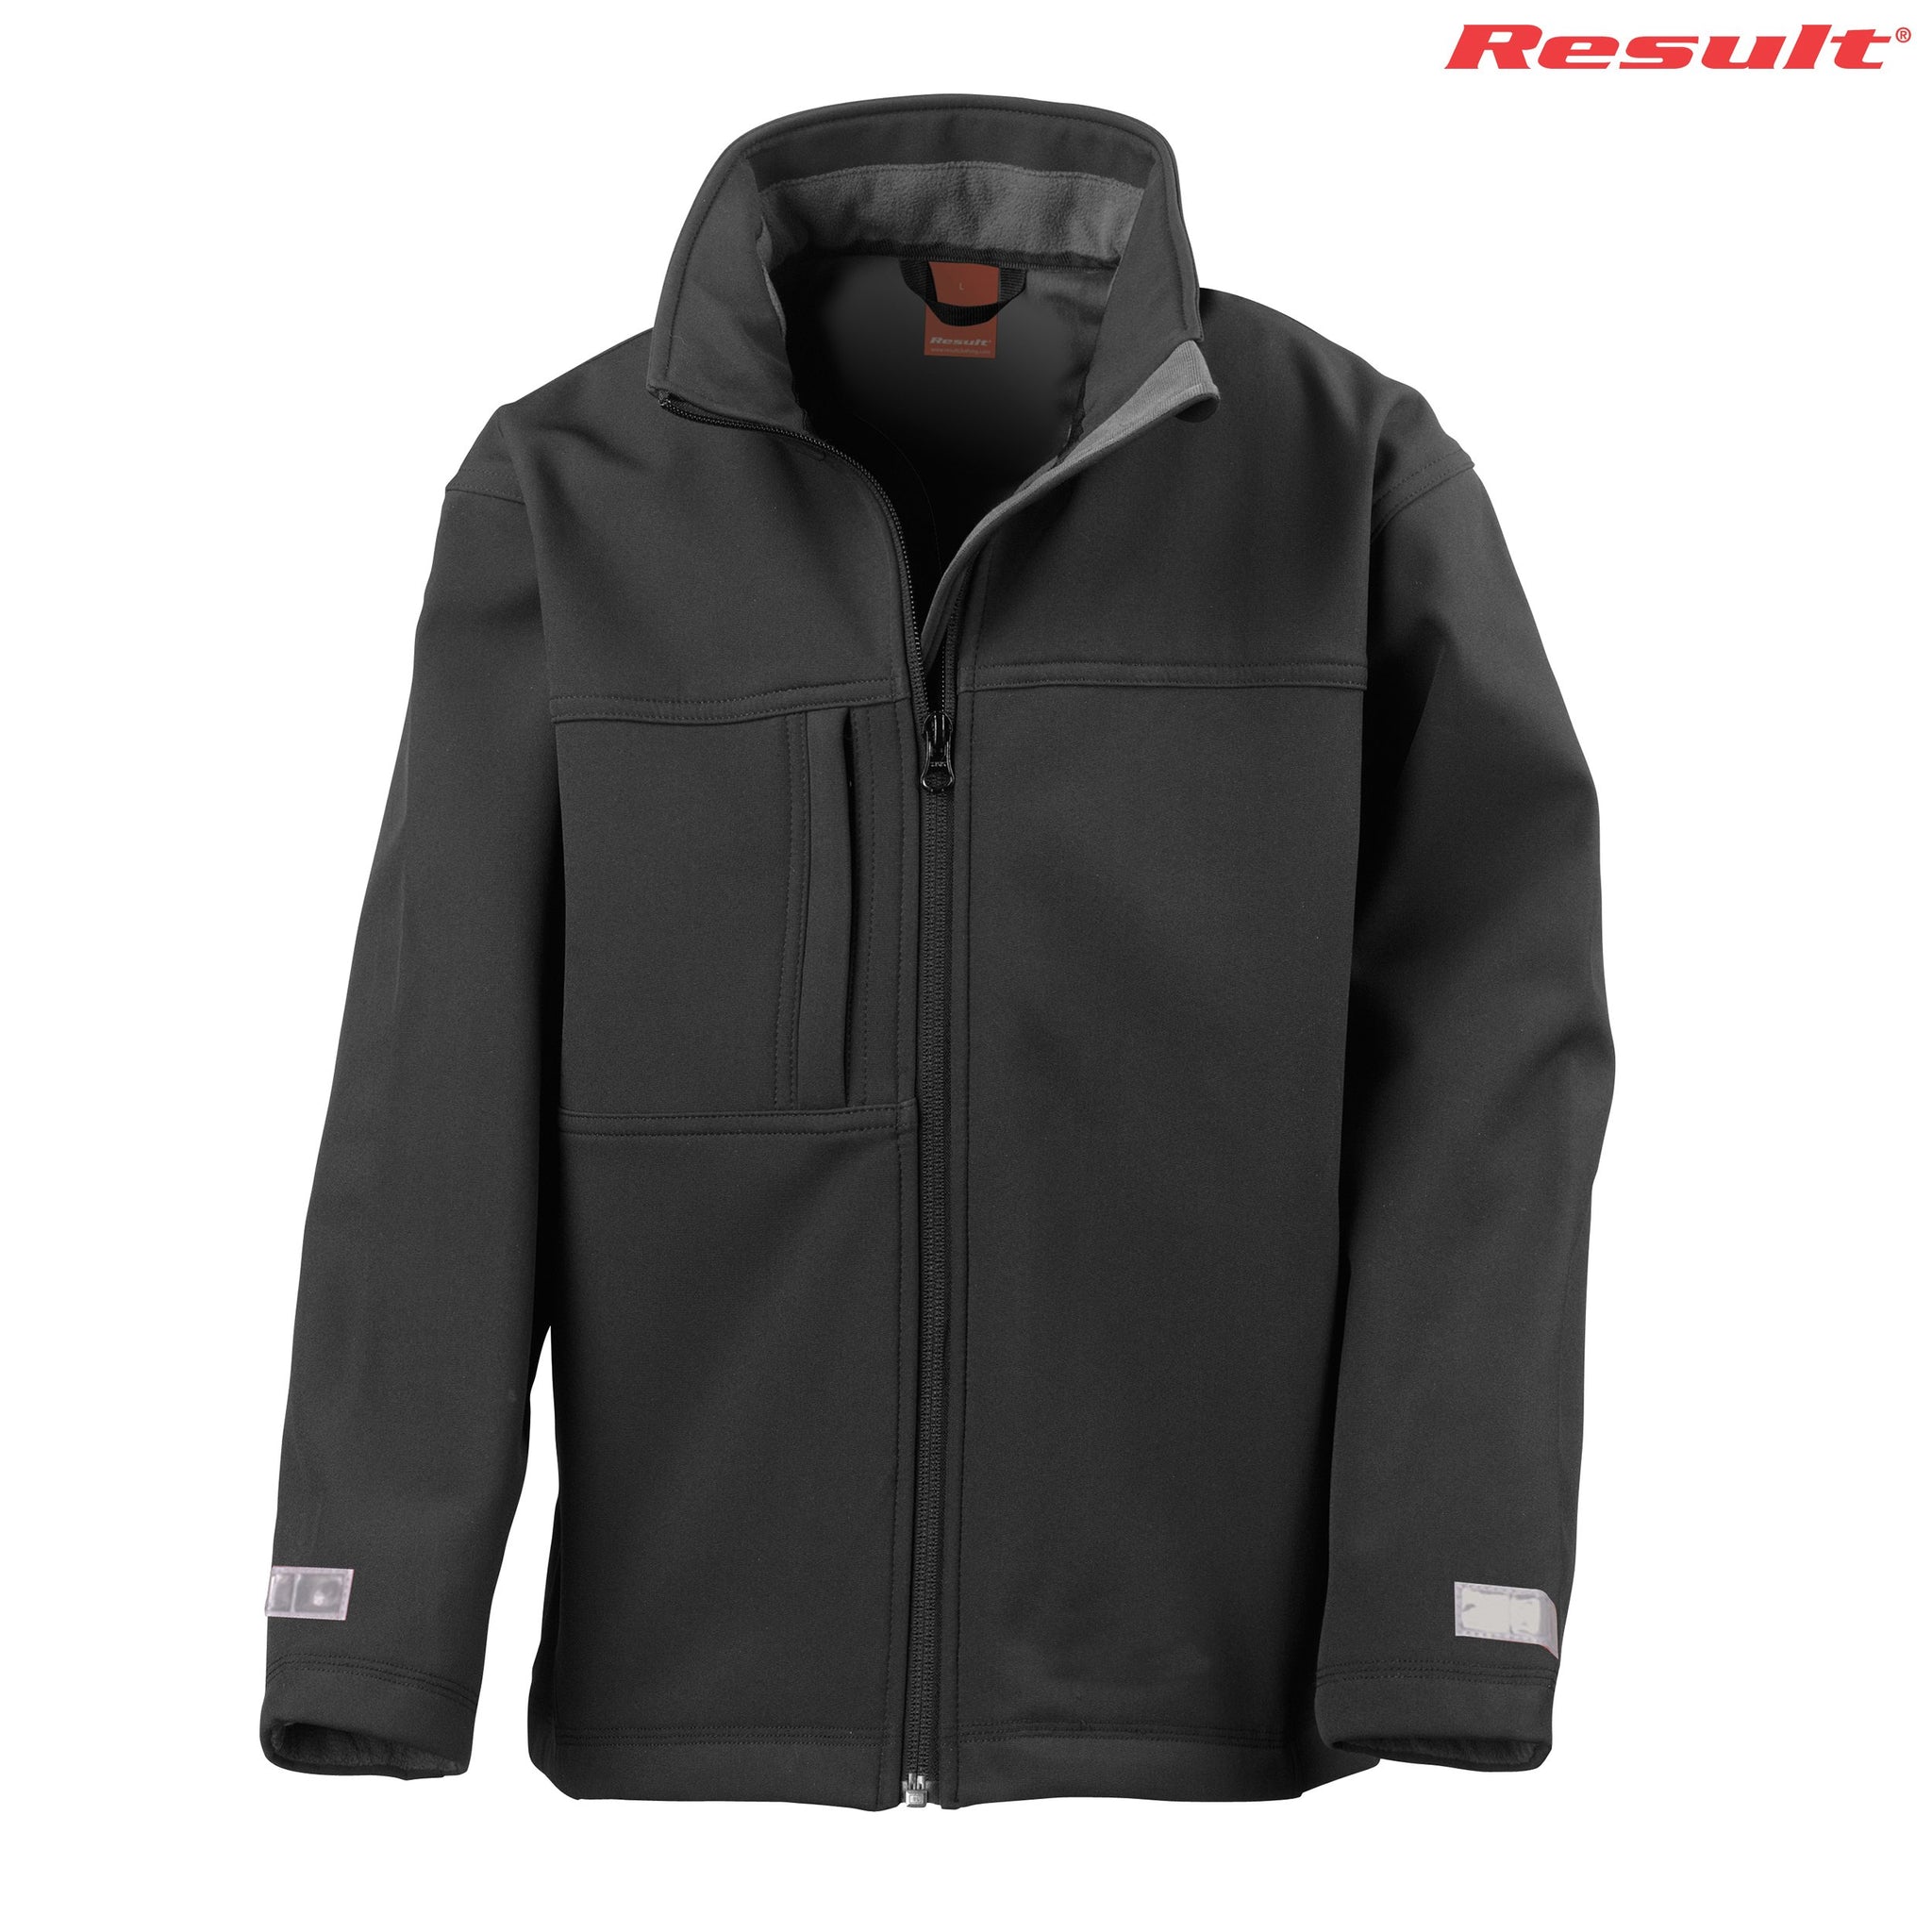 Soft Shell - R121B Result Youth Classic Softshell Jacket